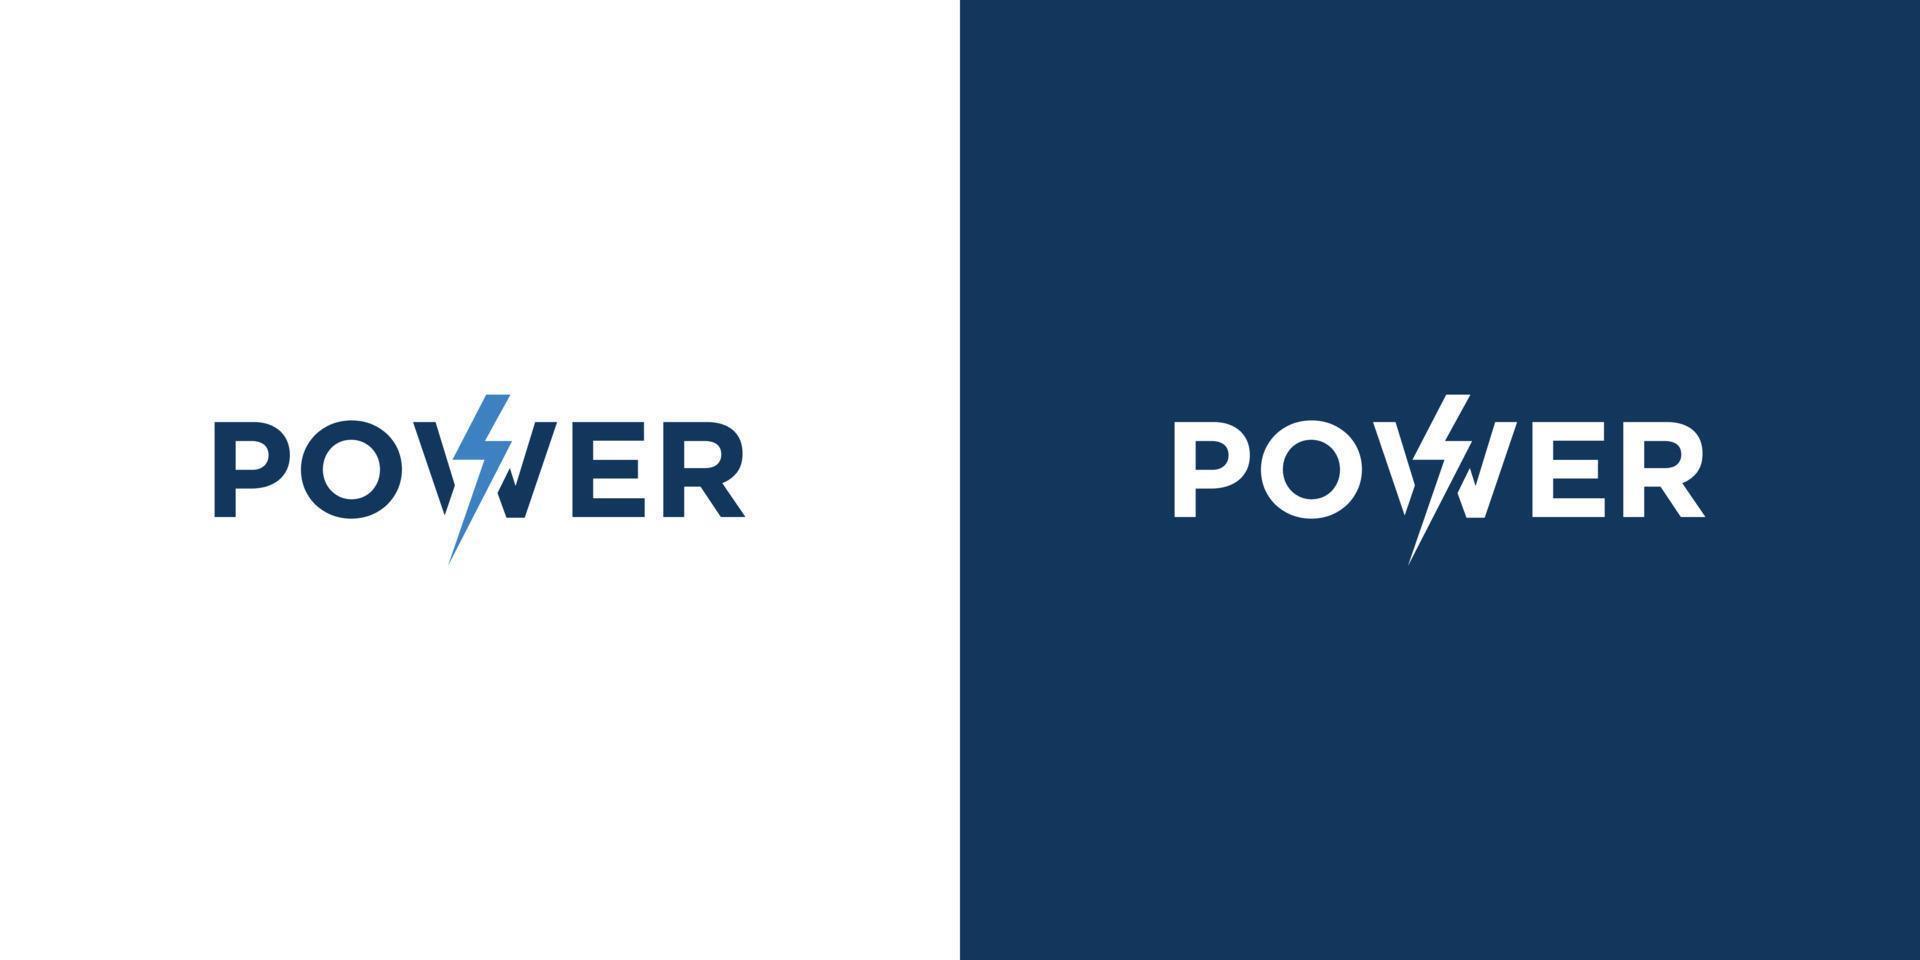 Modern and unique power logo design vector